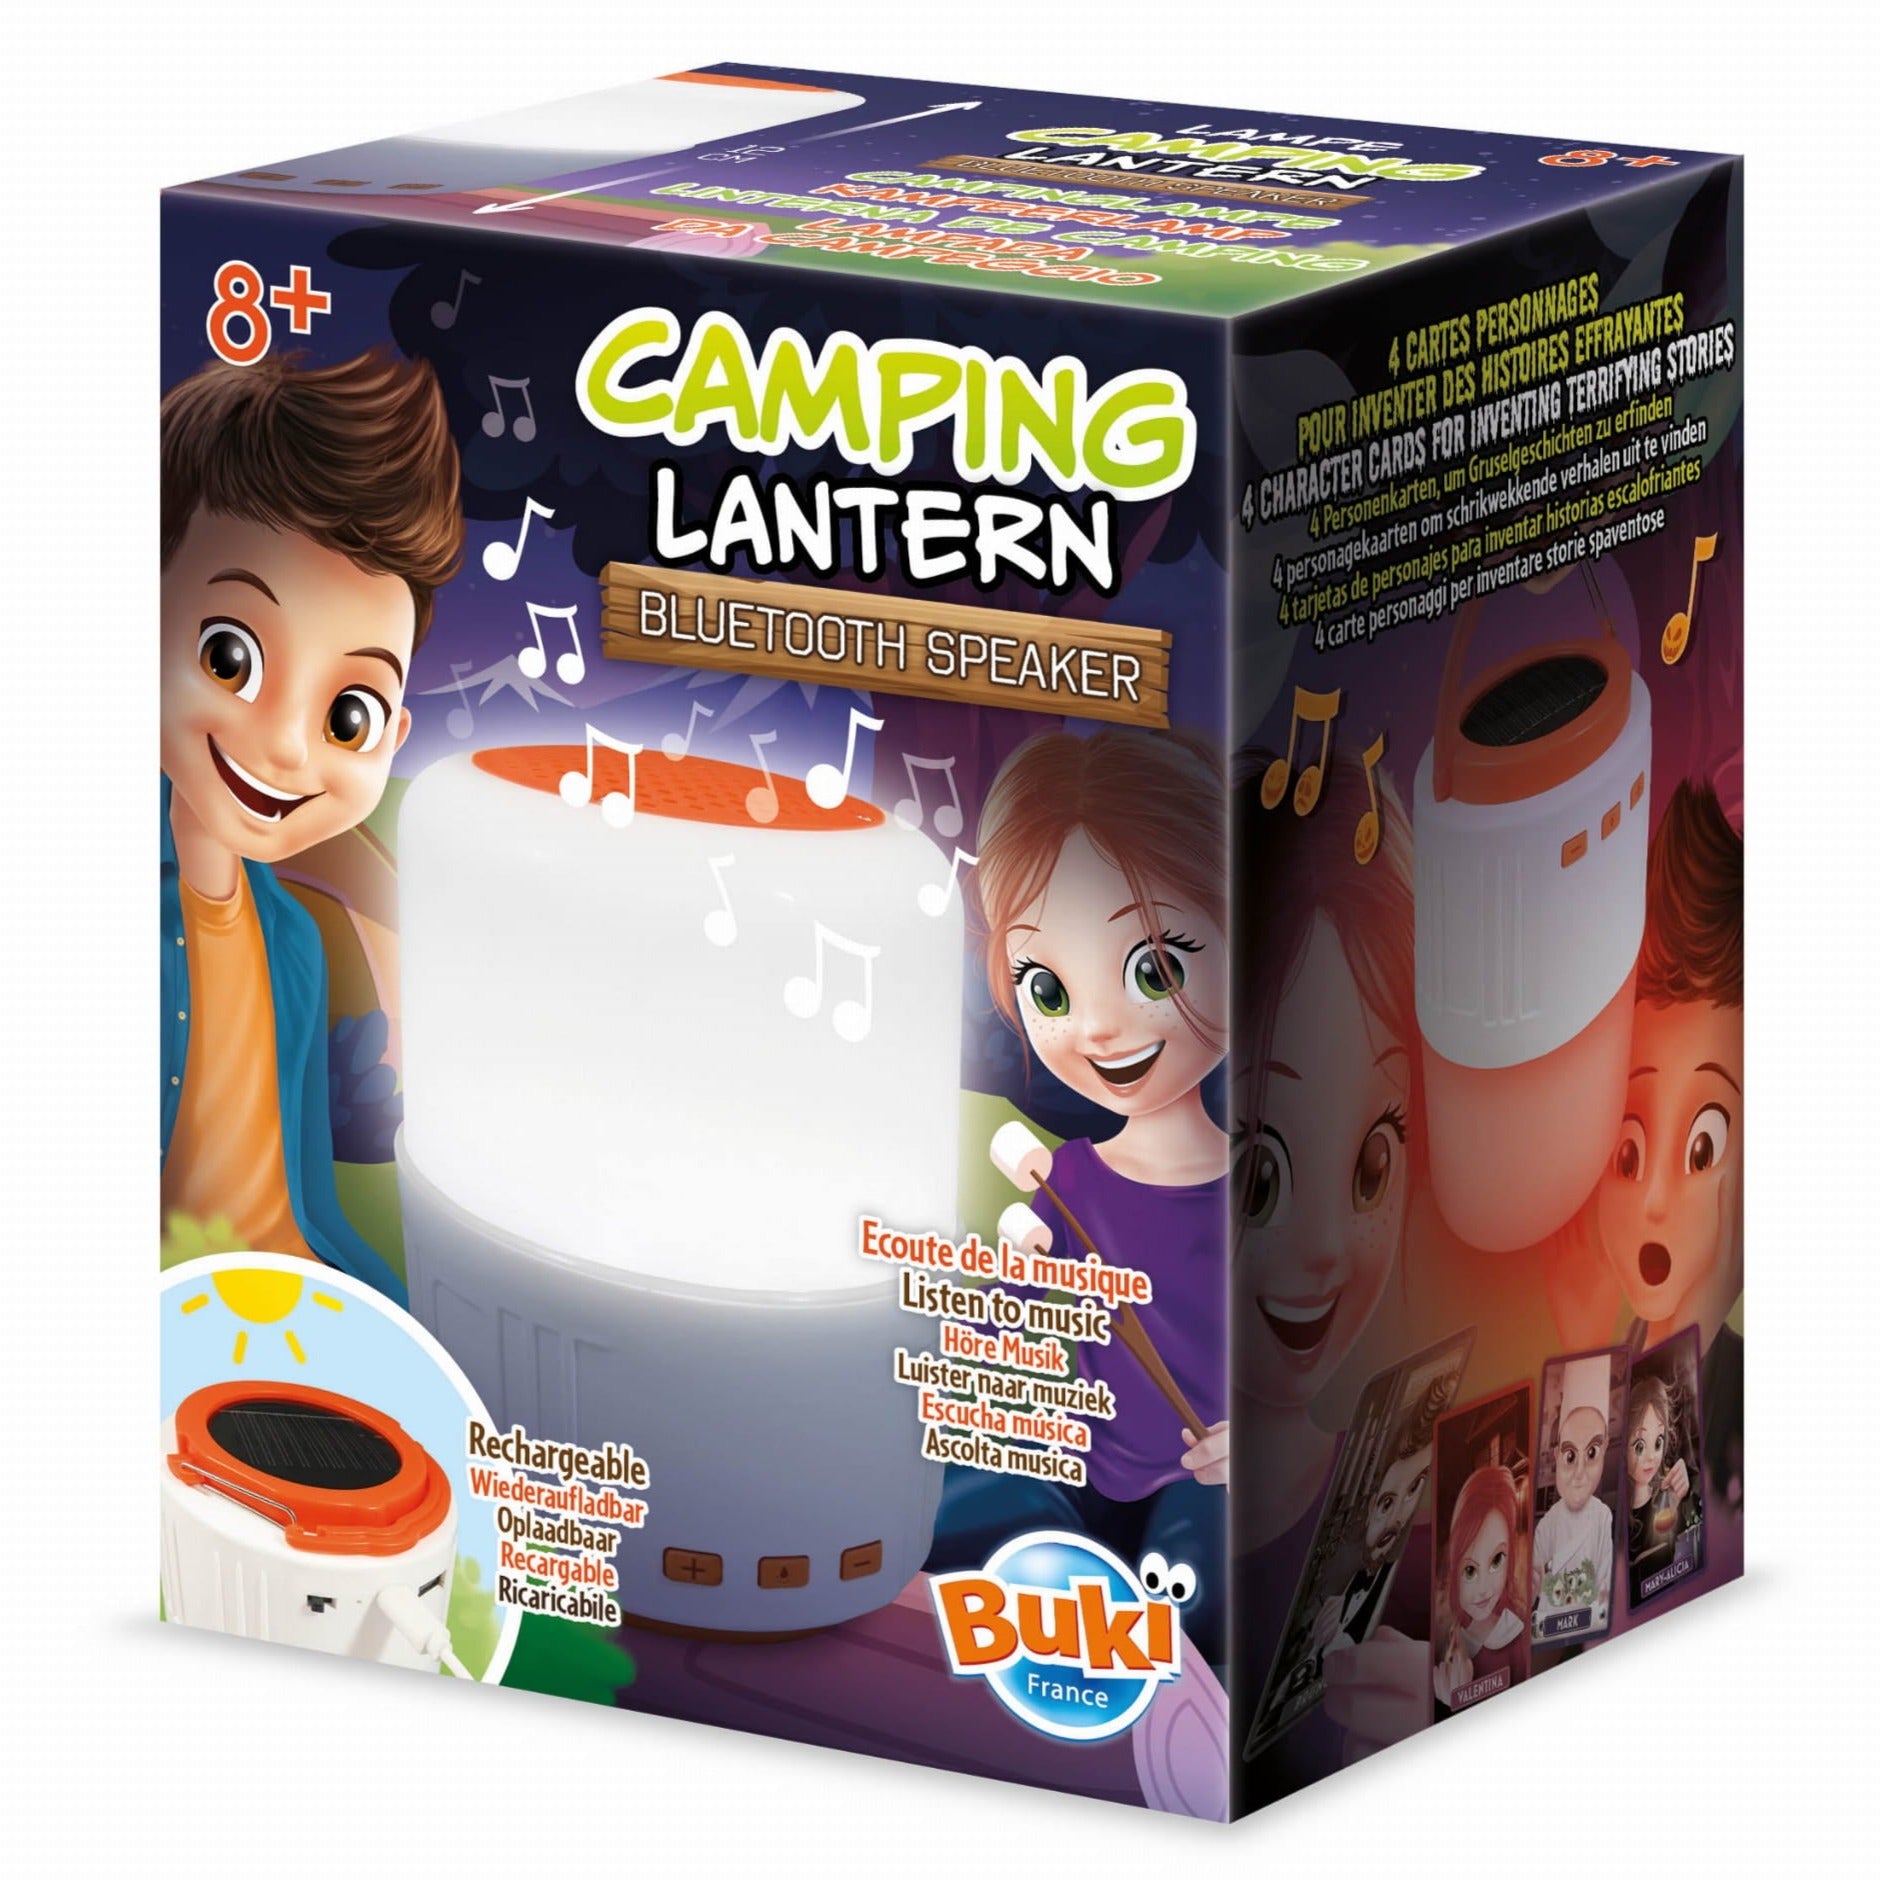 Buki: Bluetooth flashlight for camping